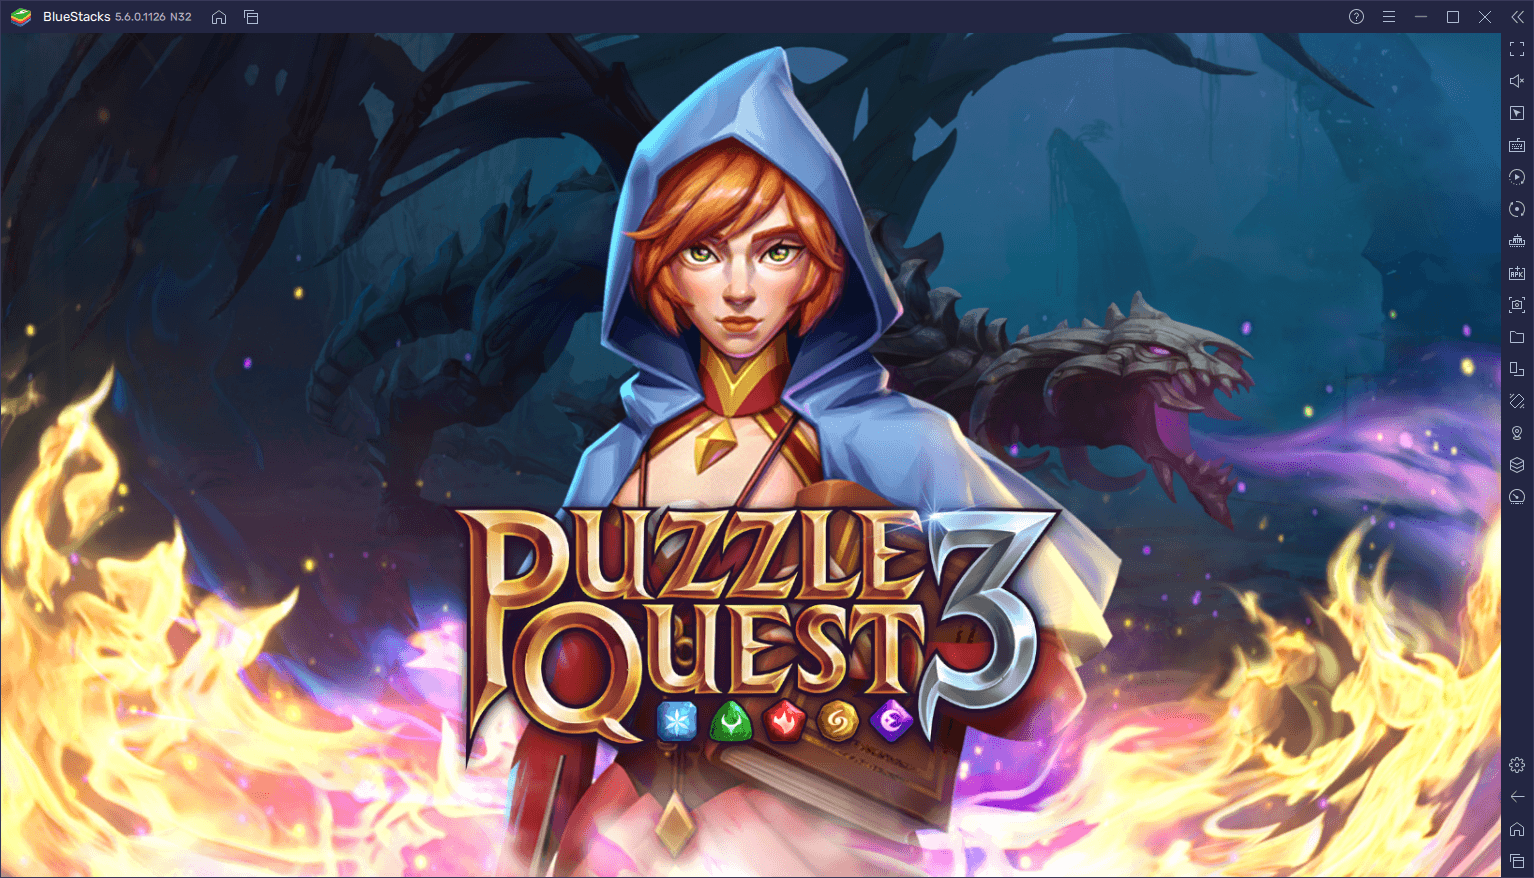 So spielst du Puzzle Quest 3 auf dem PC mit BlueStacks